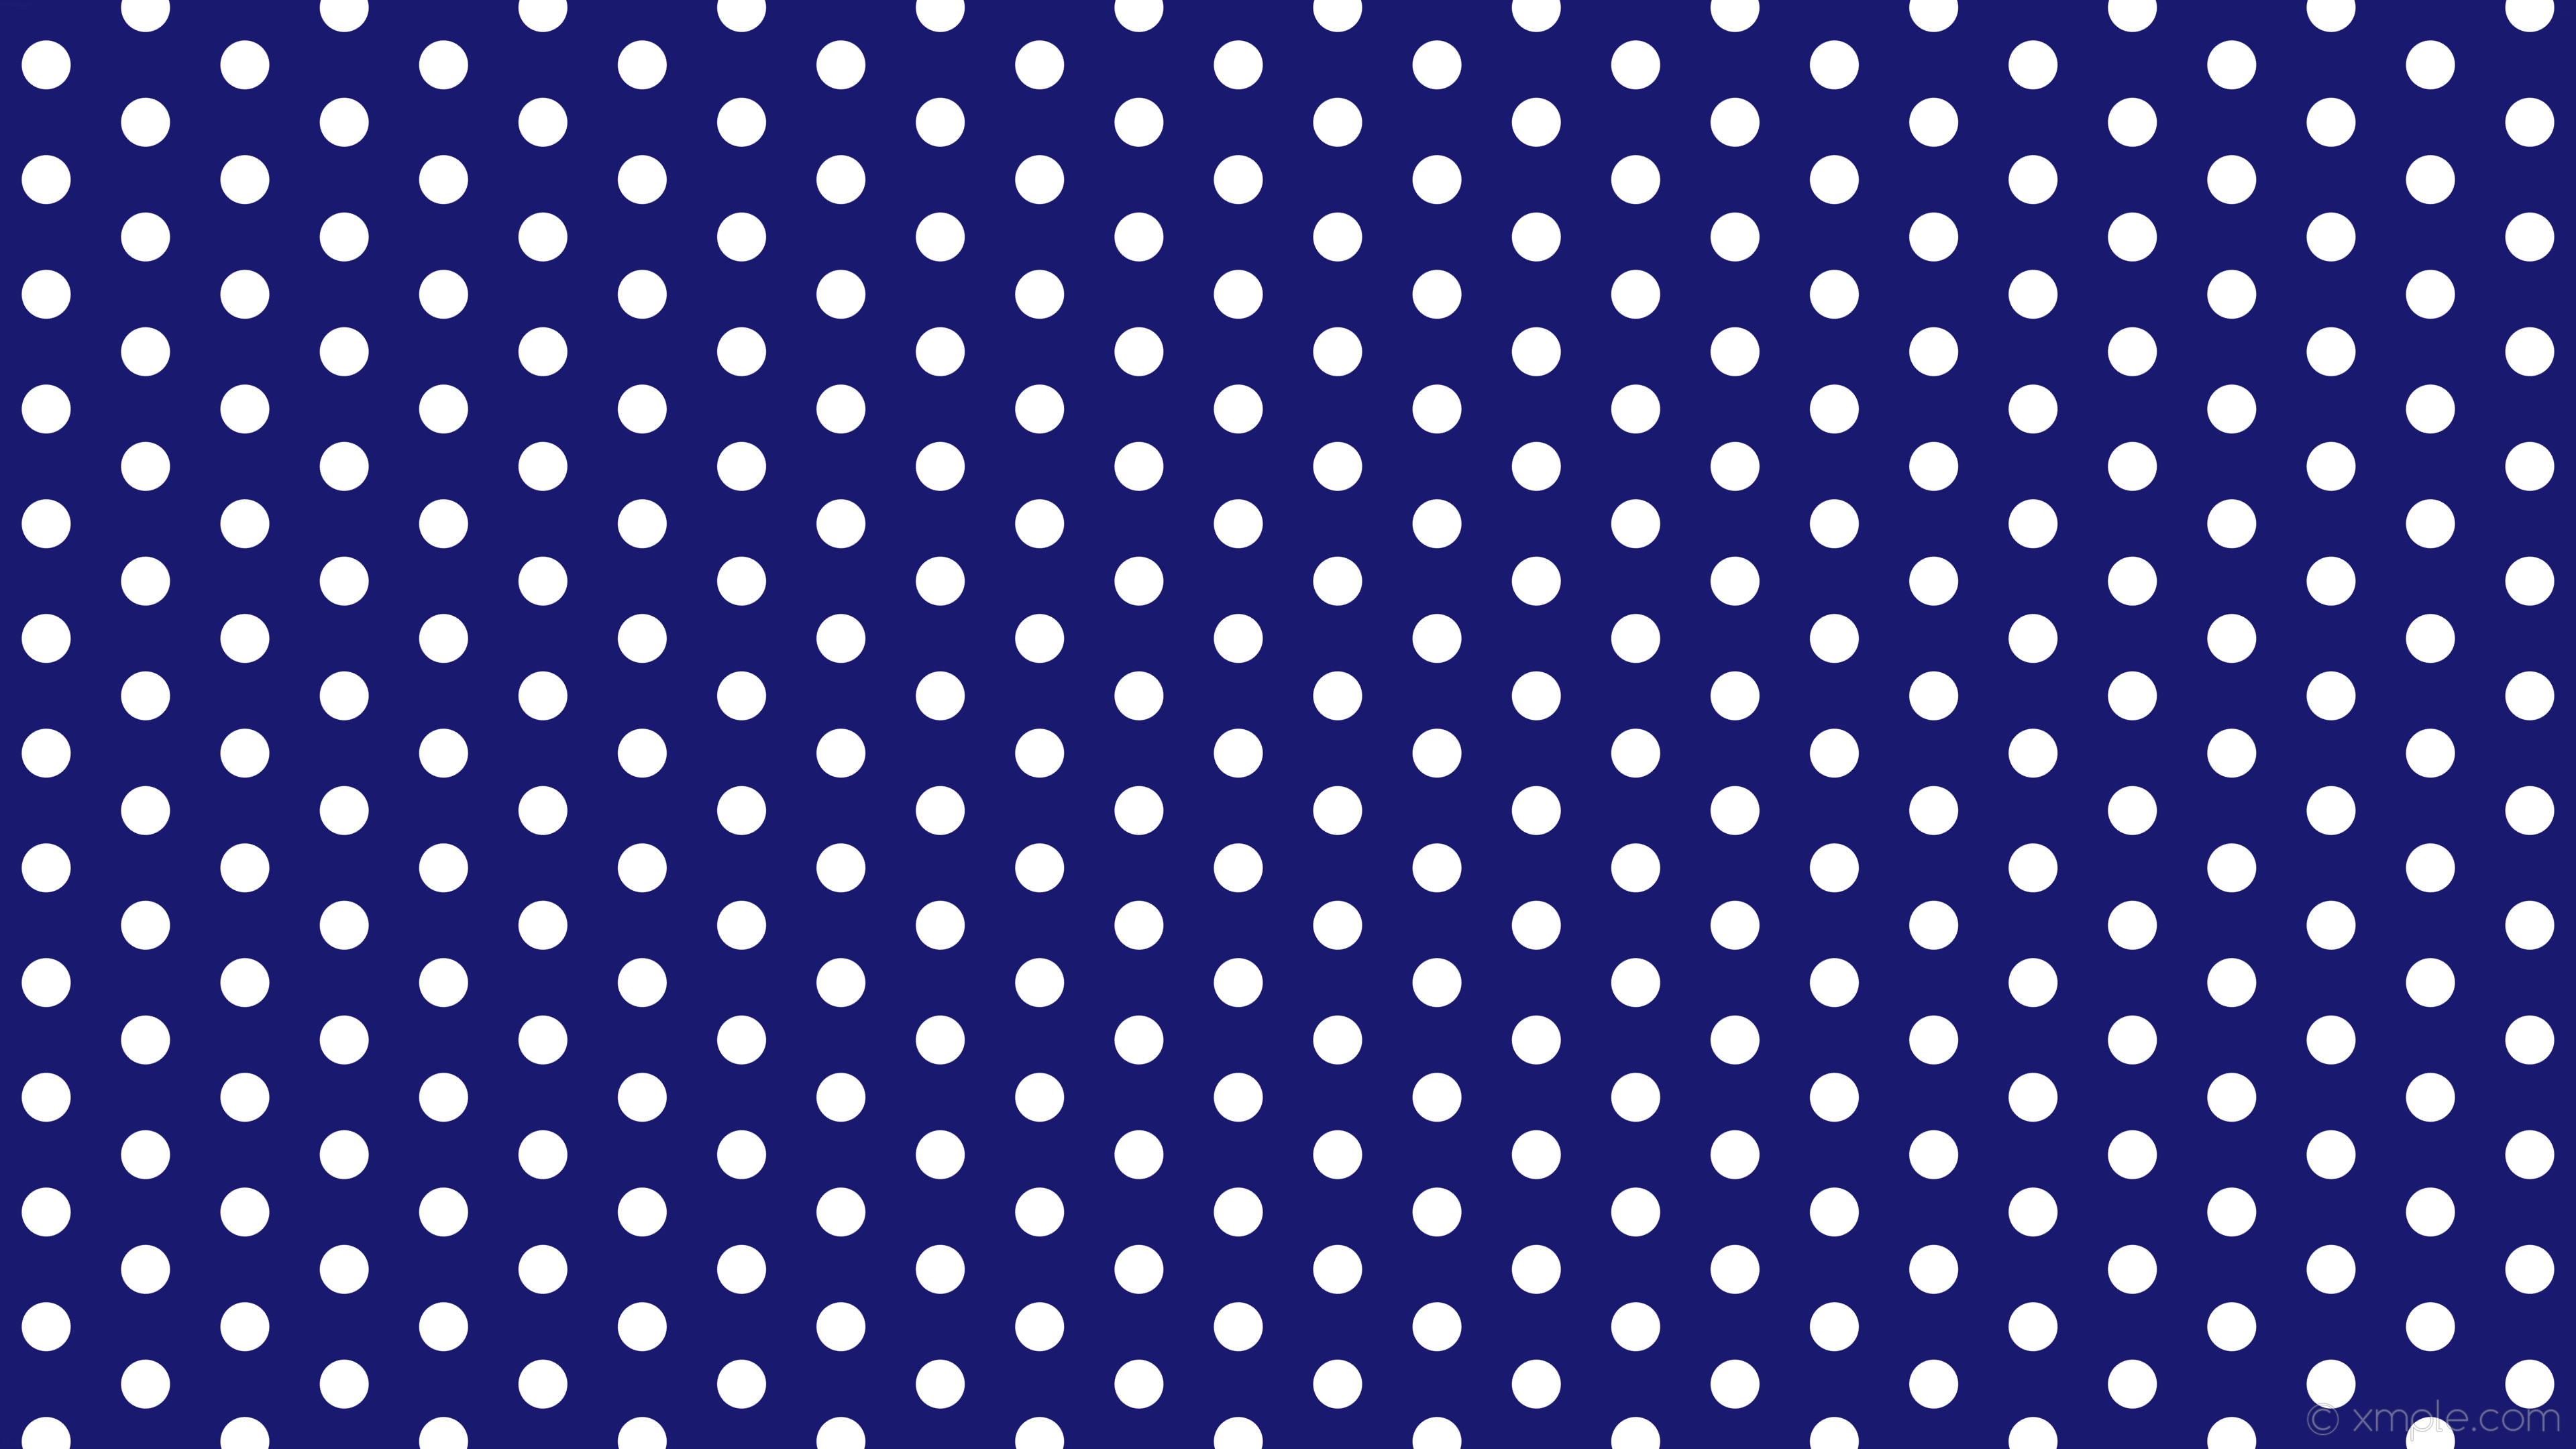 Blue Polka Dot Wallpaper Images 5332 | Hot Sex Picture